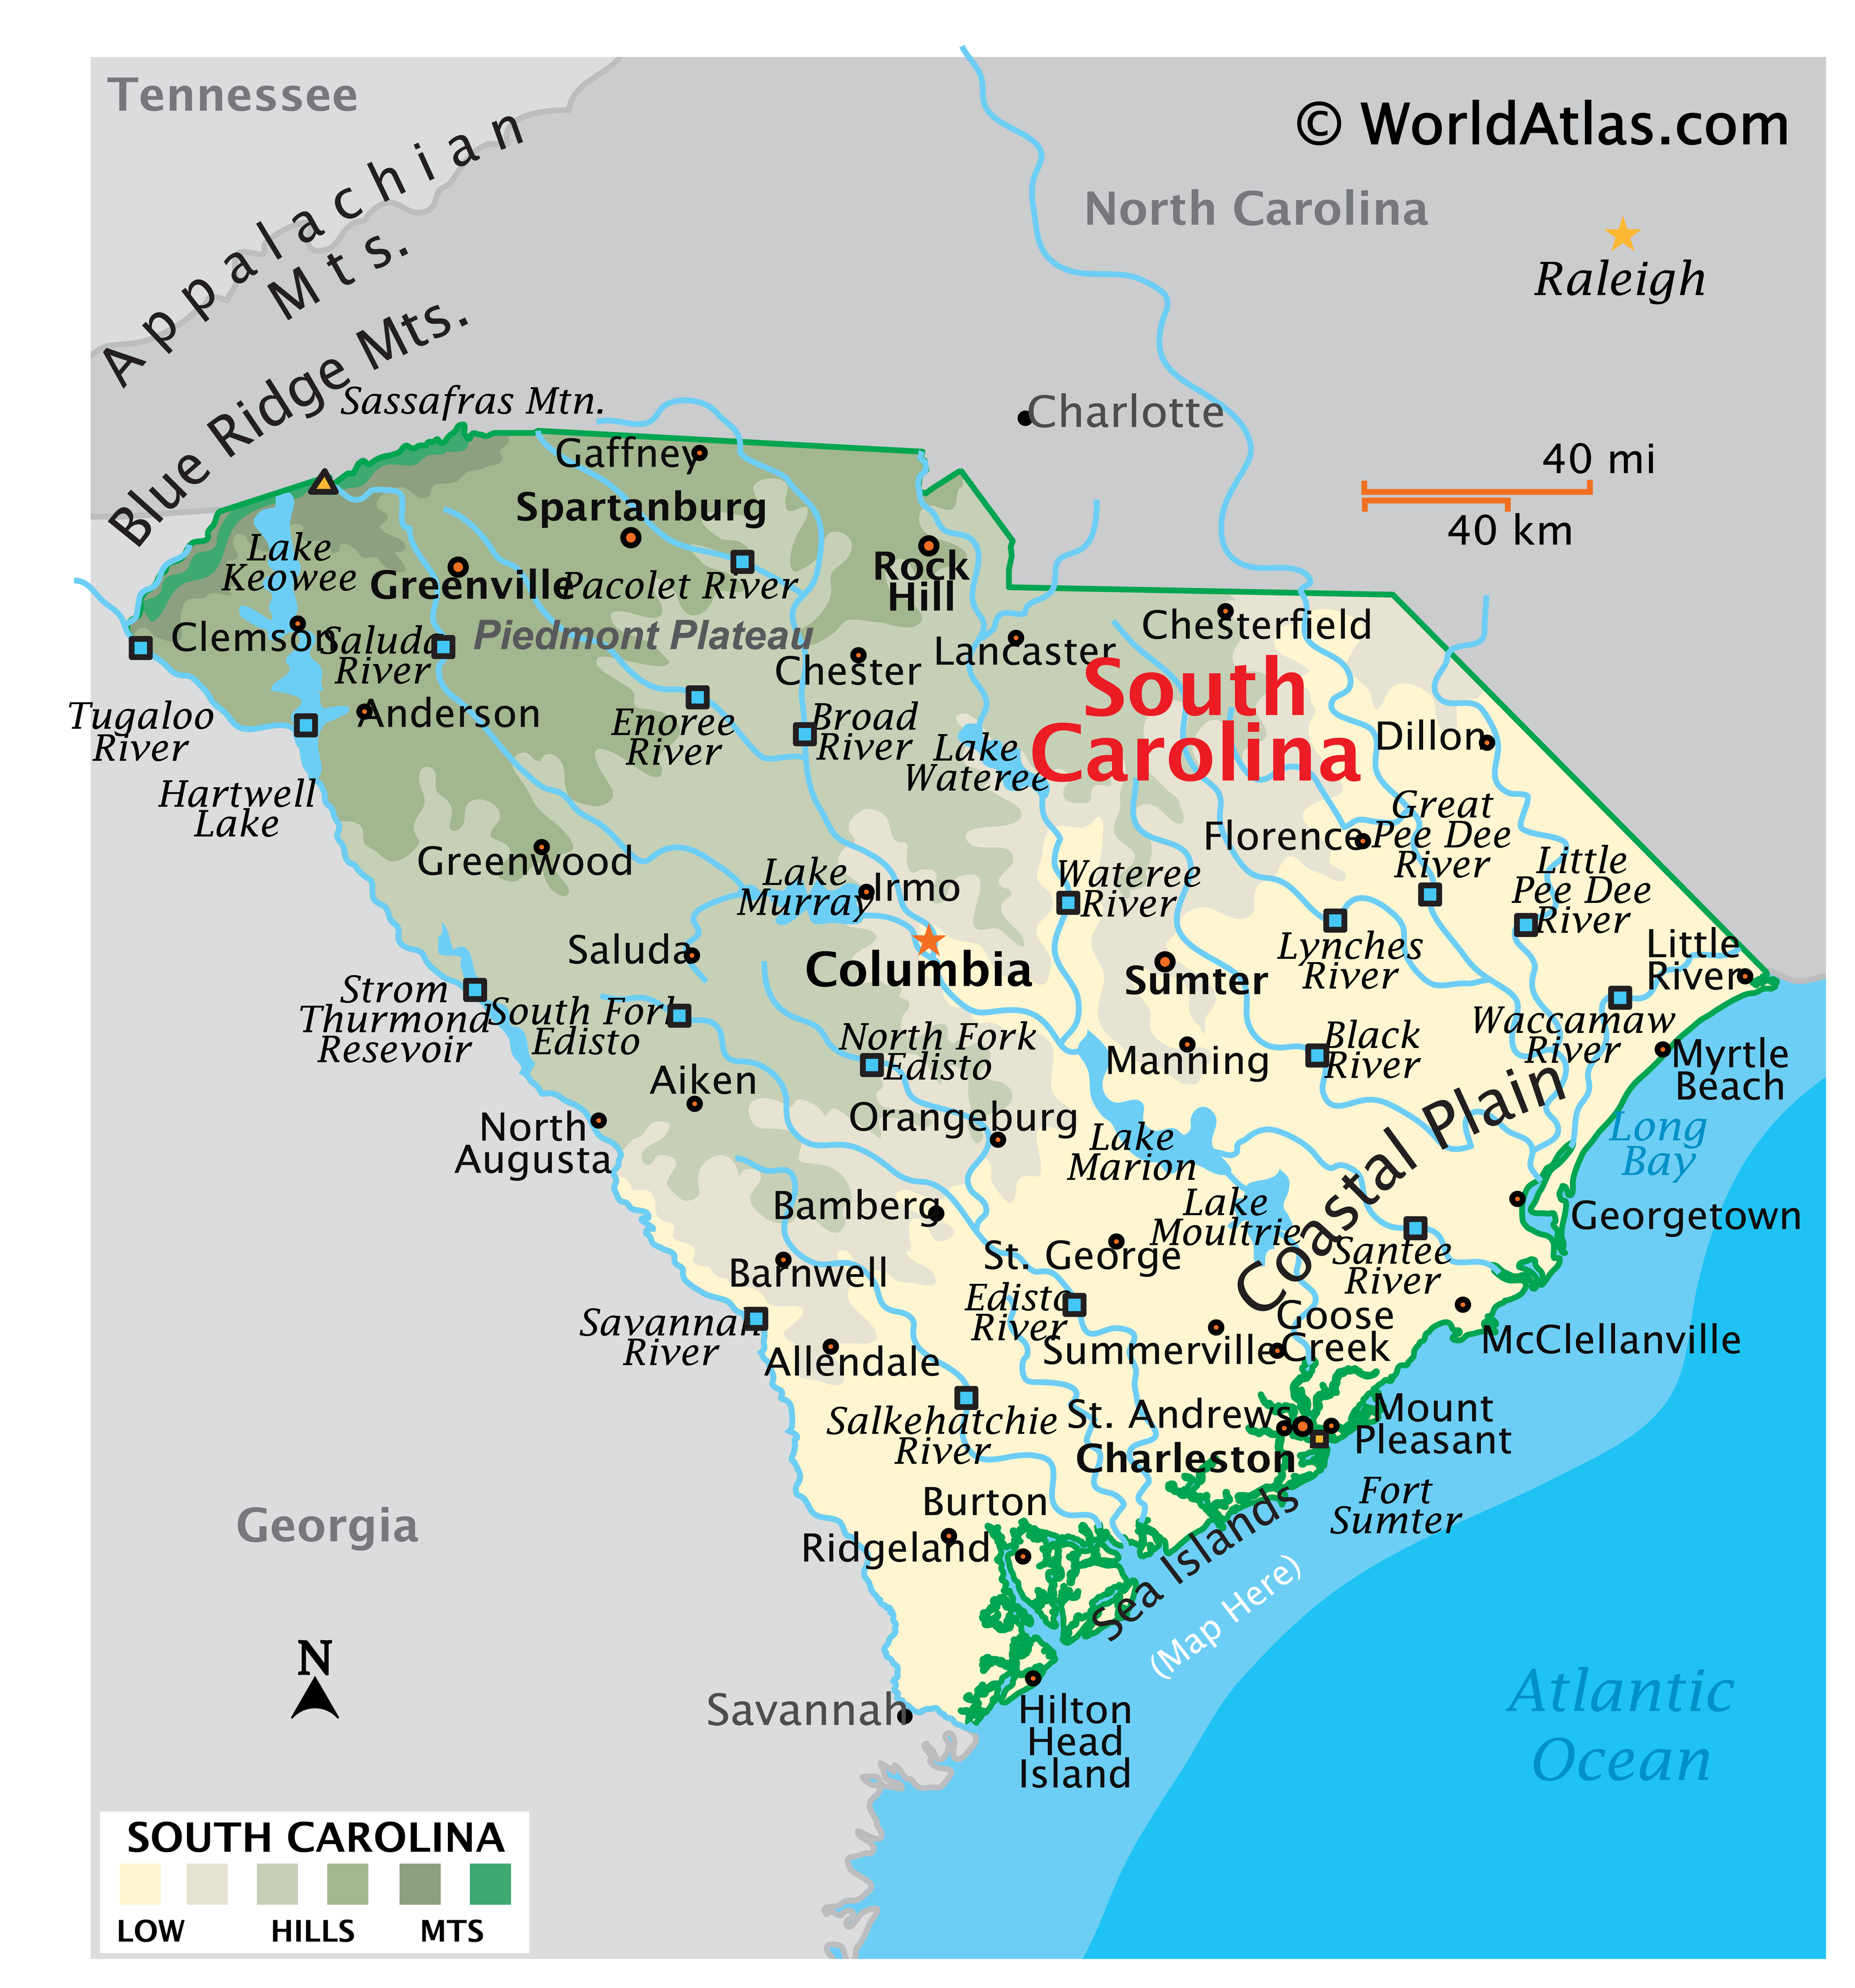 charleston sc on us map Map Of South Carolina South Carolina Map Charleston Facts Sc charleston sc on us map